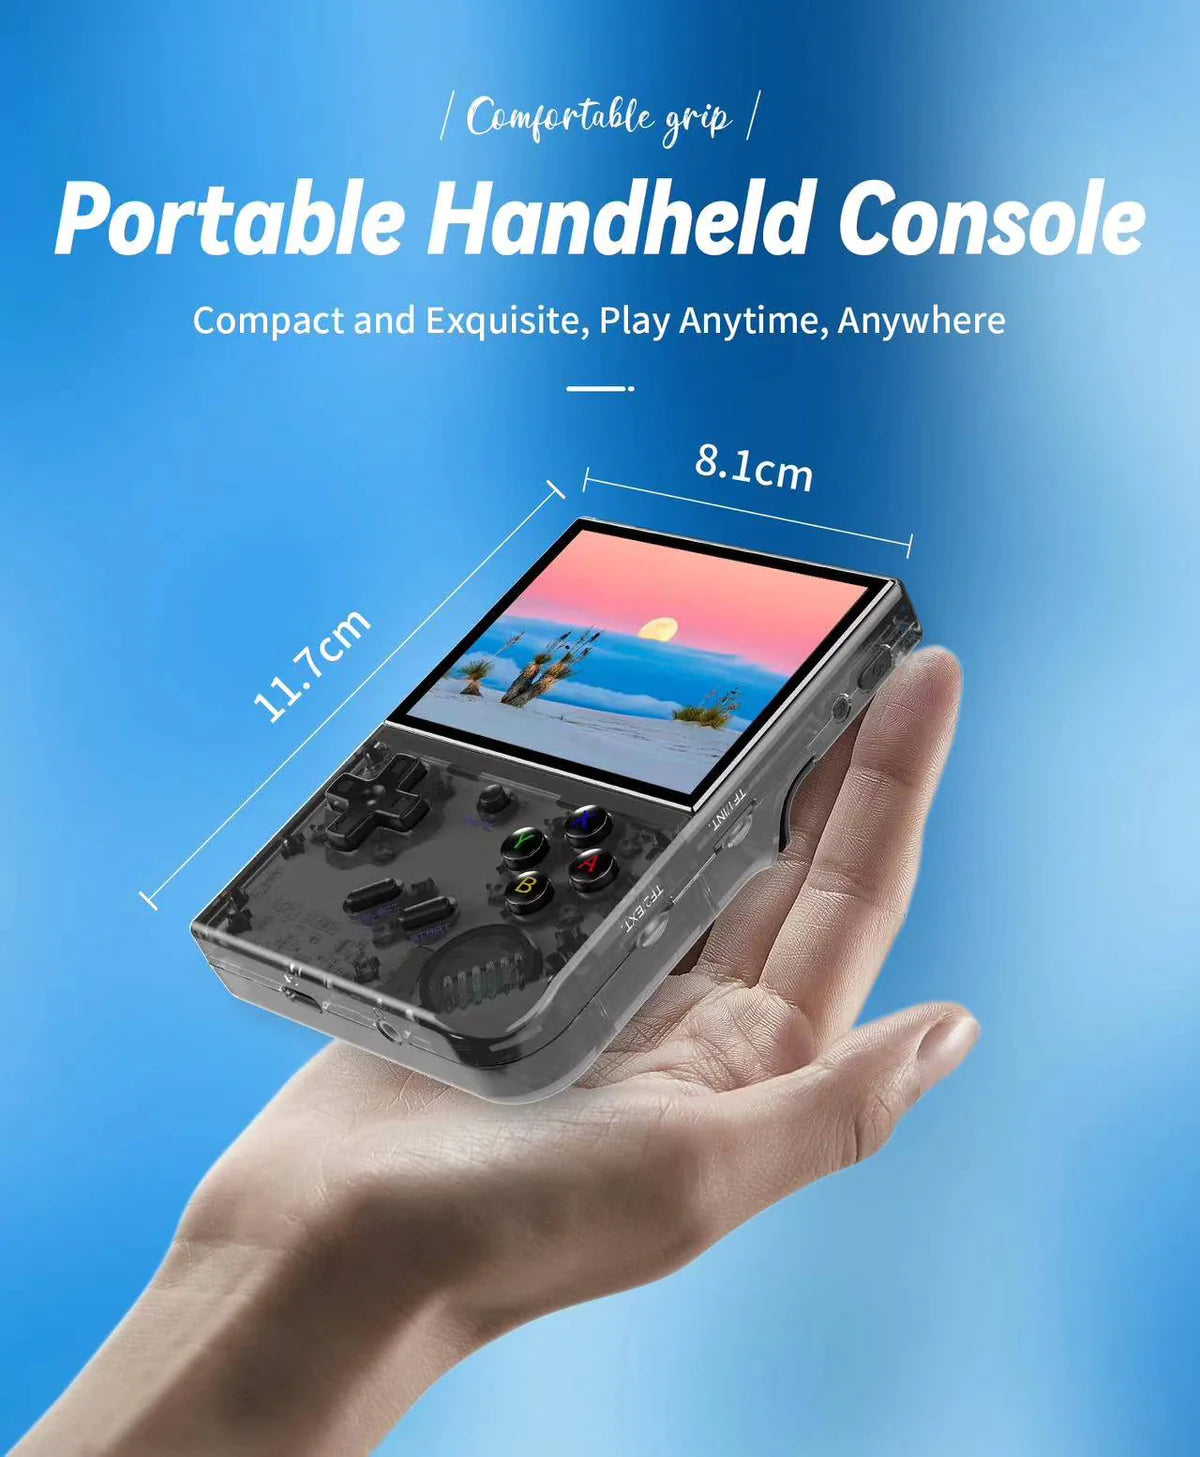 Anbernic RG35XX PLUS Retro Handheld Gaming Console (64GB)